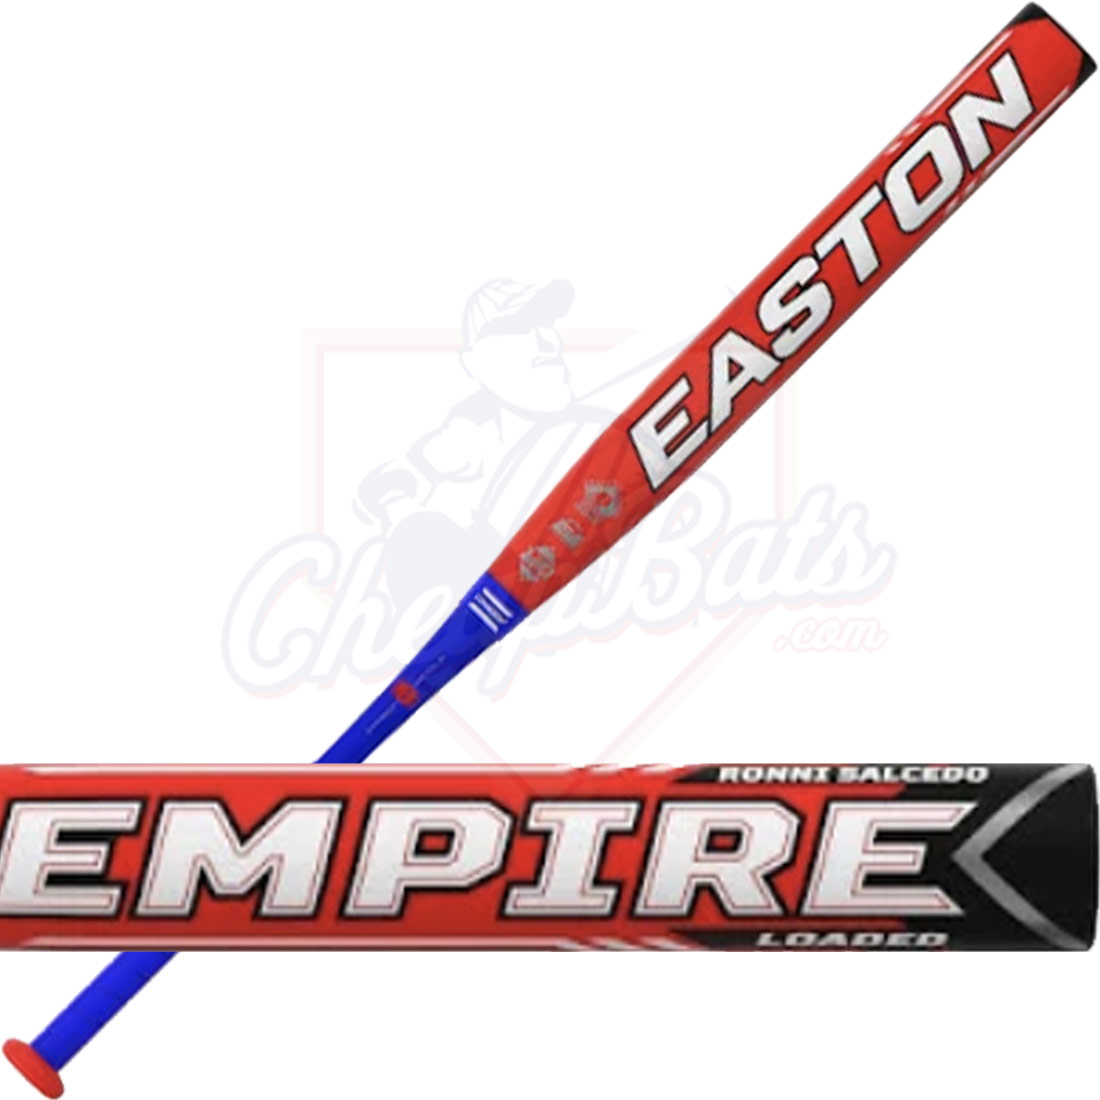 2020 Easton Empire Ronnie Salcedo Senior Slowpitch Softball Bat Loaded SSUSA SP20RS2L